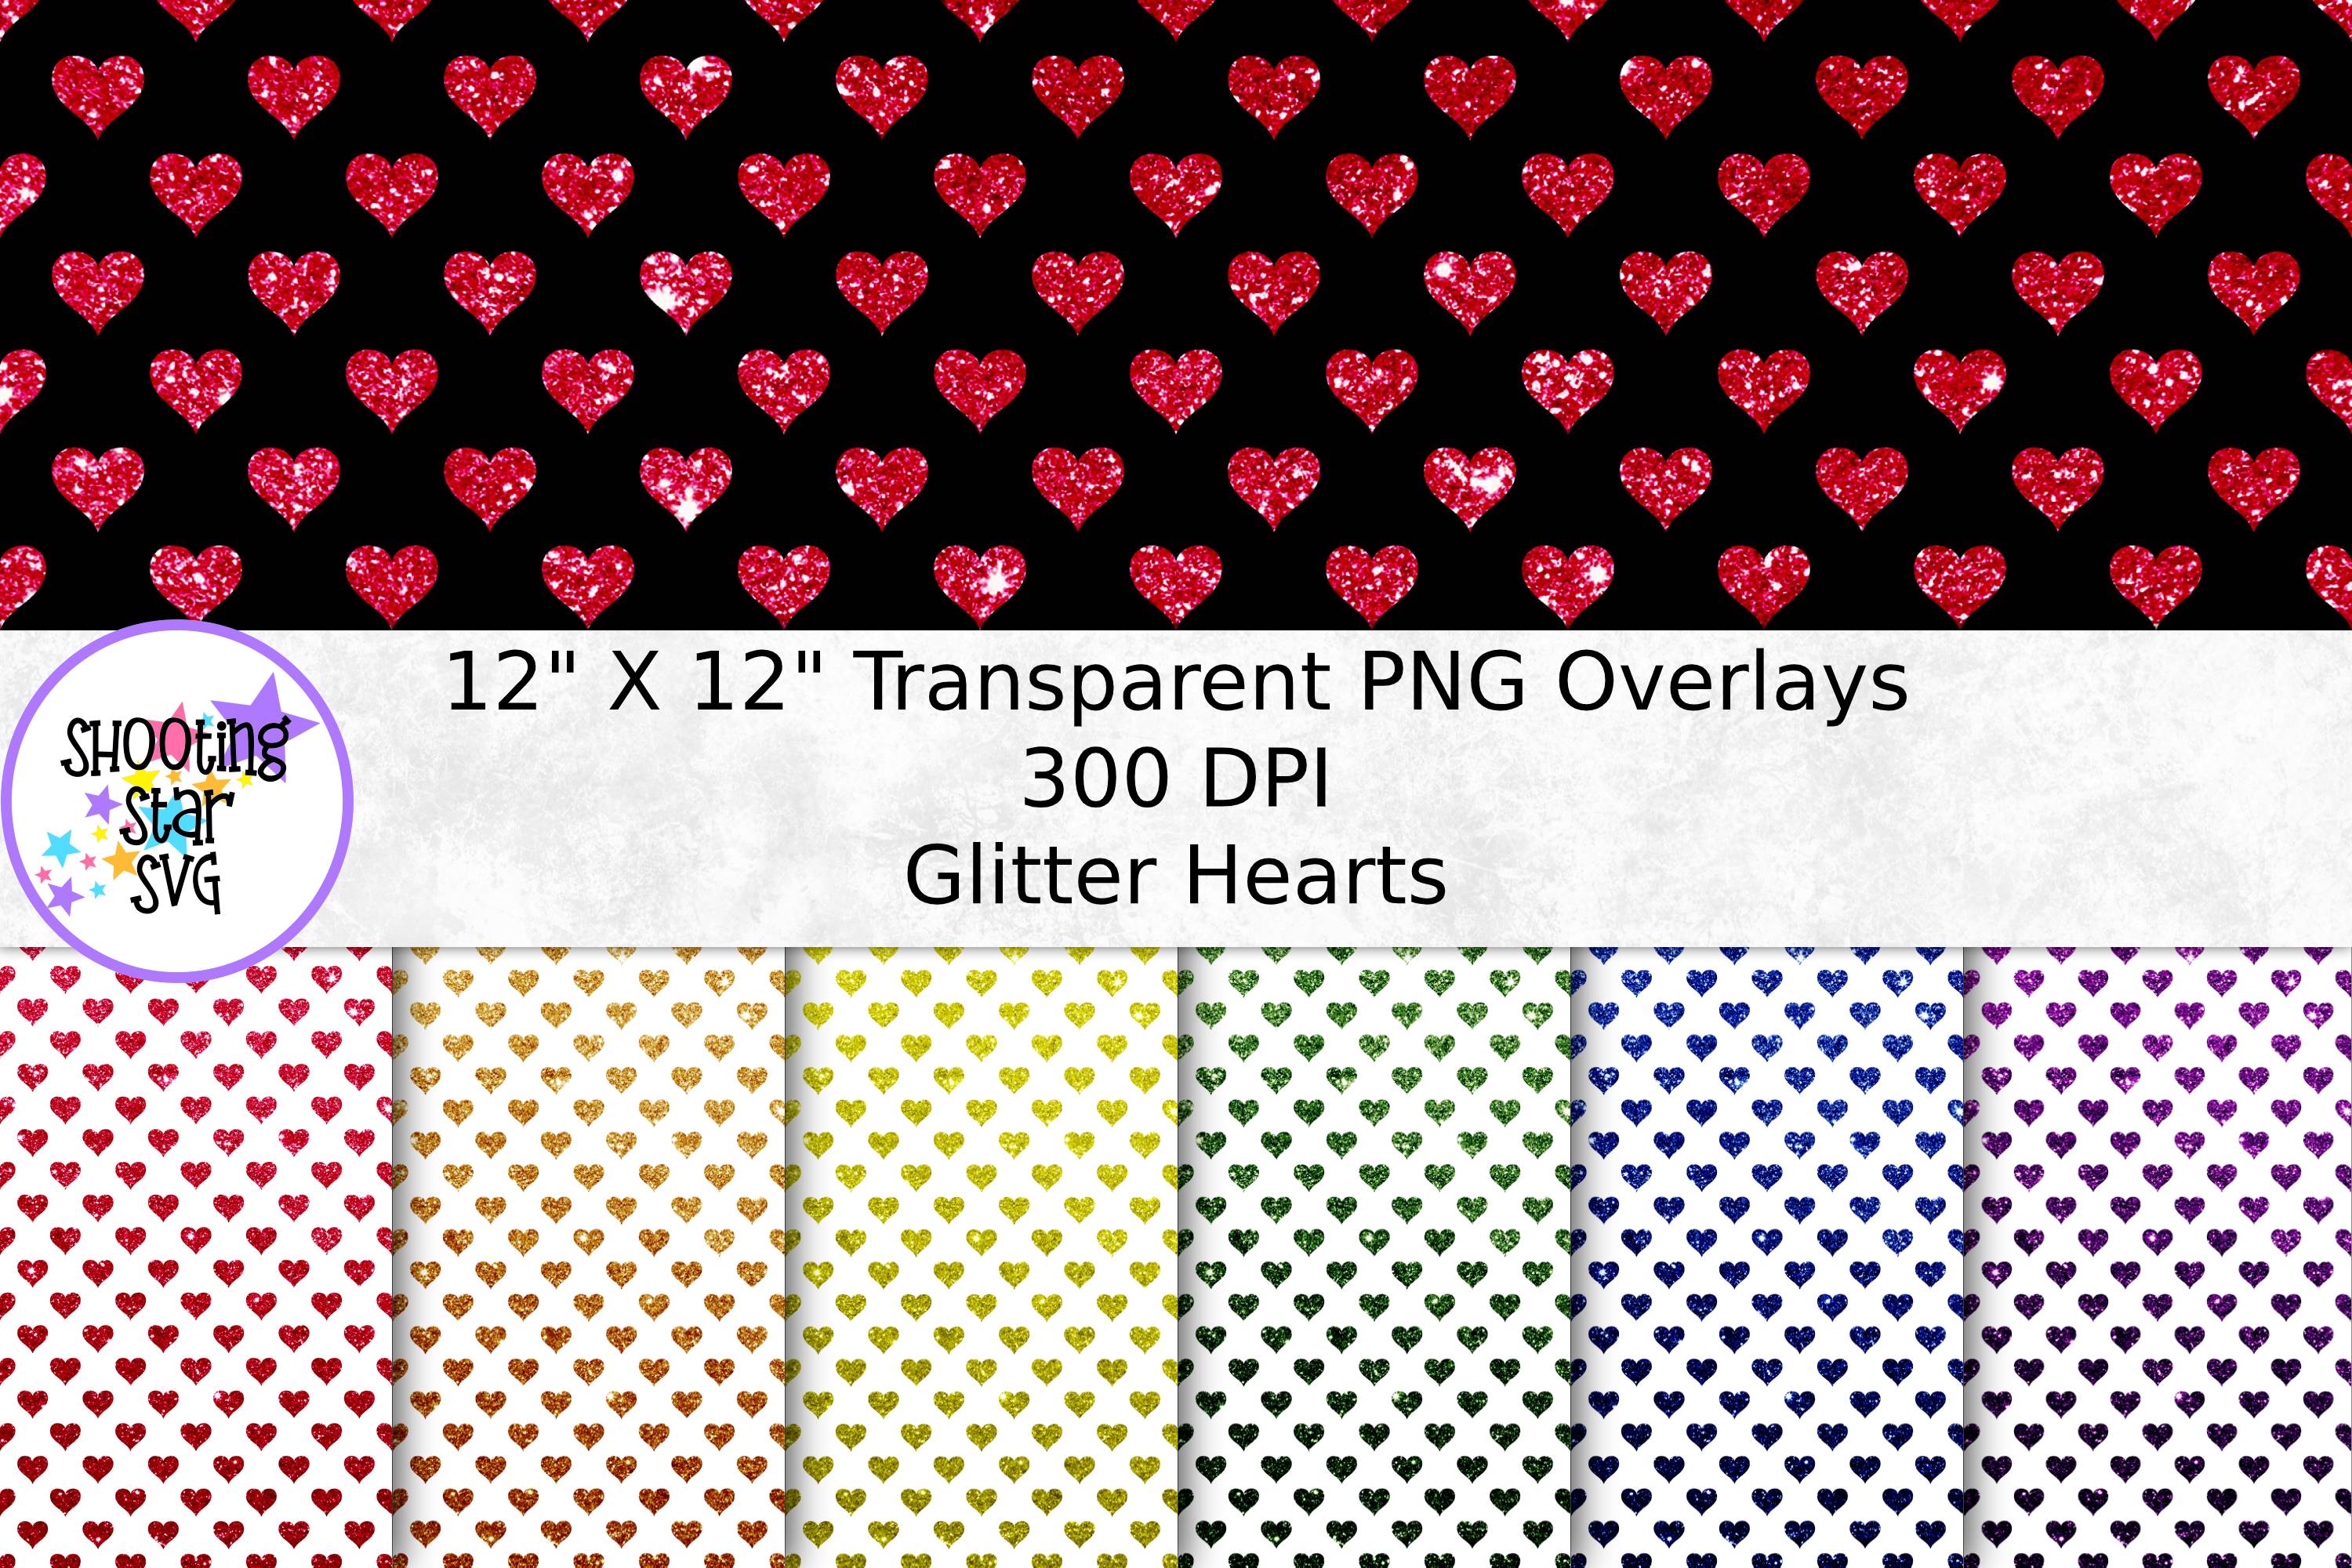 Glitter Hearts Transparent Paper Overlay - Seamless